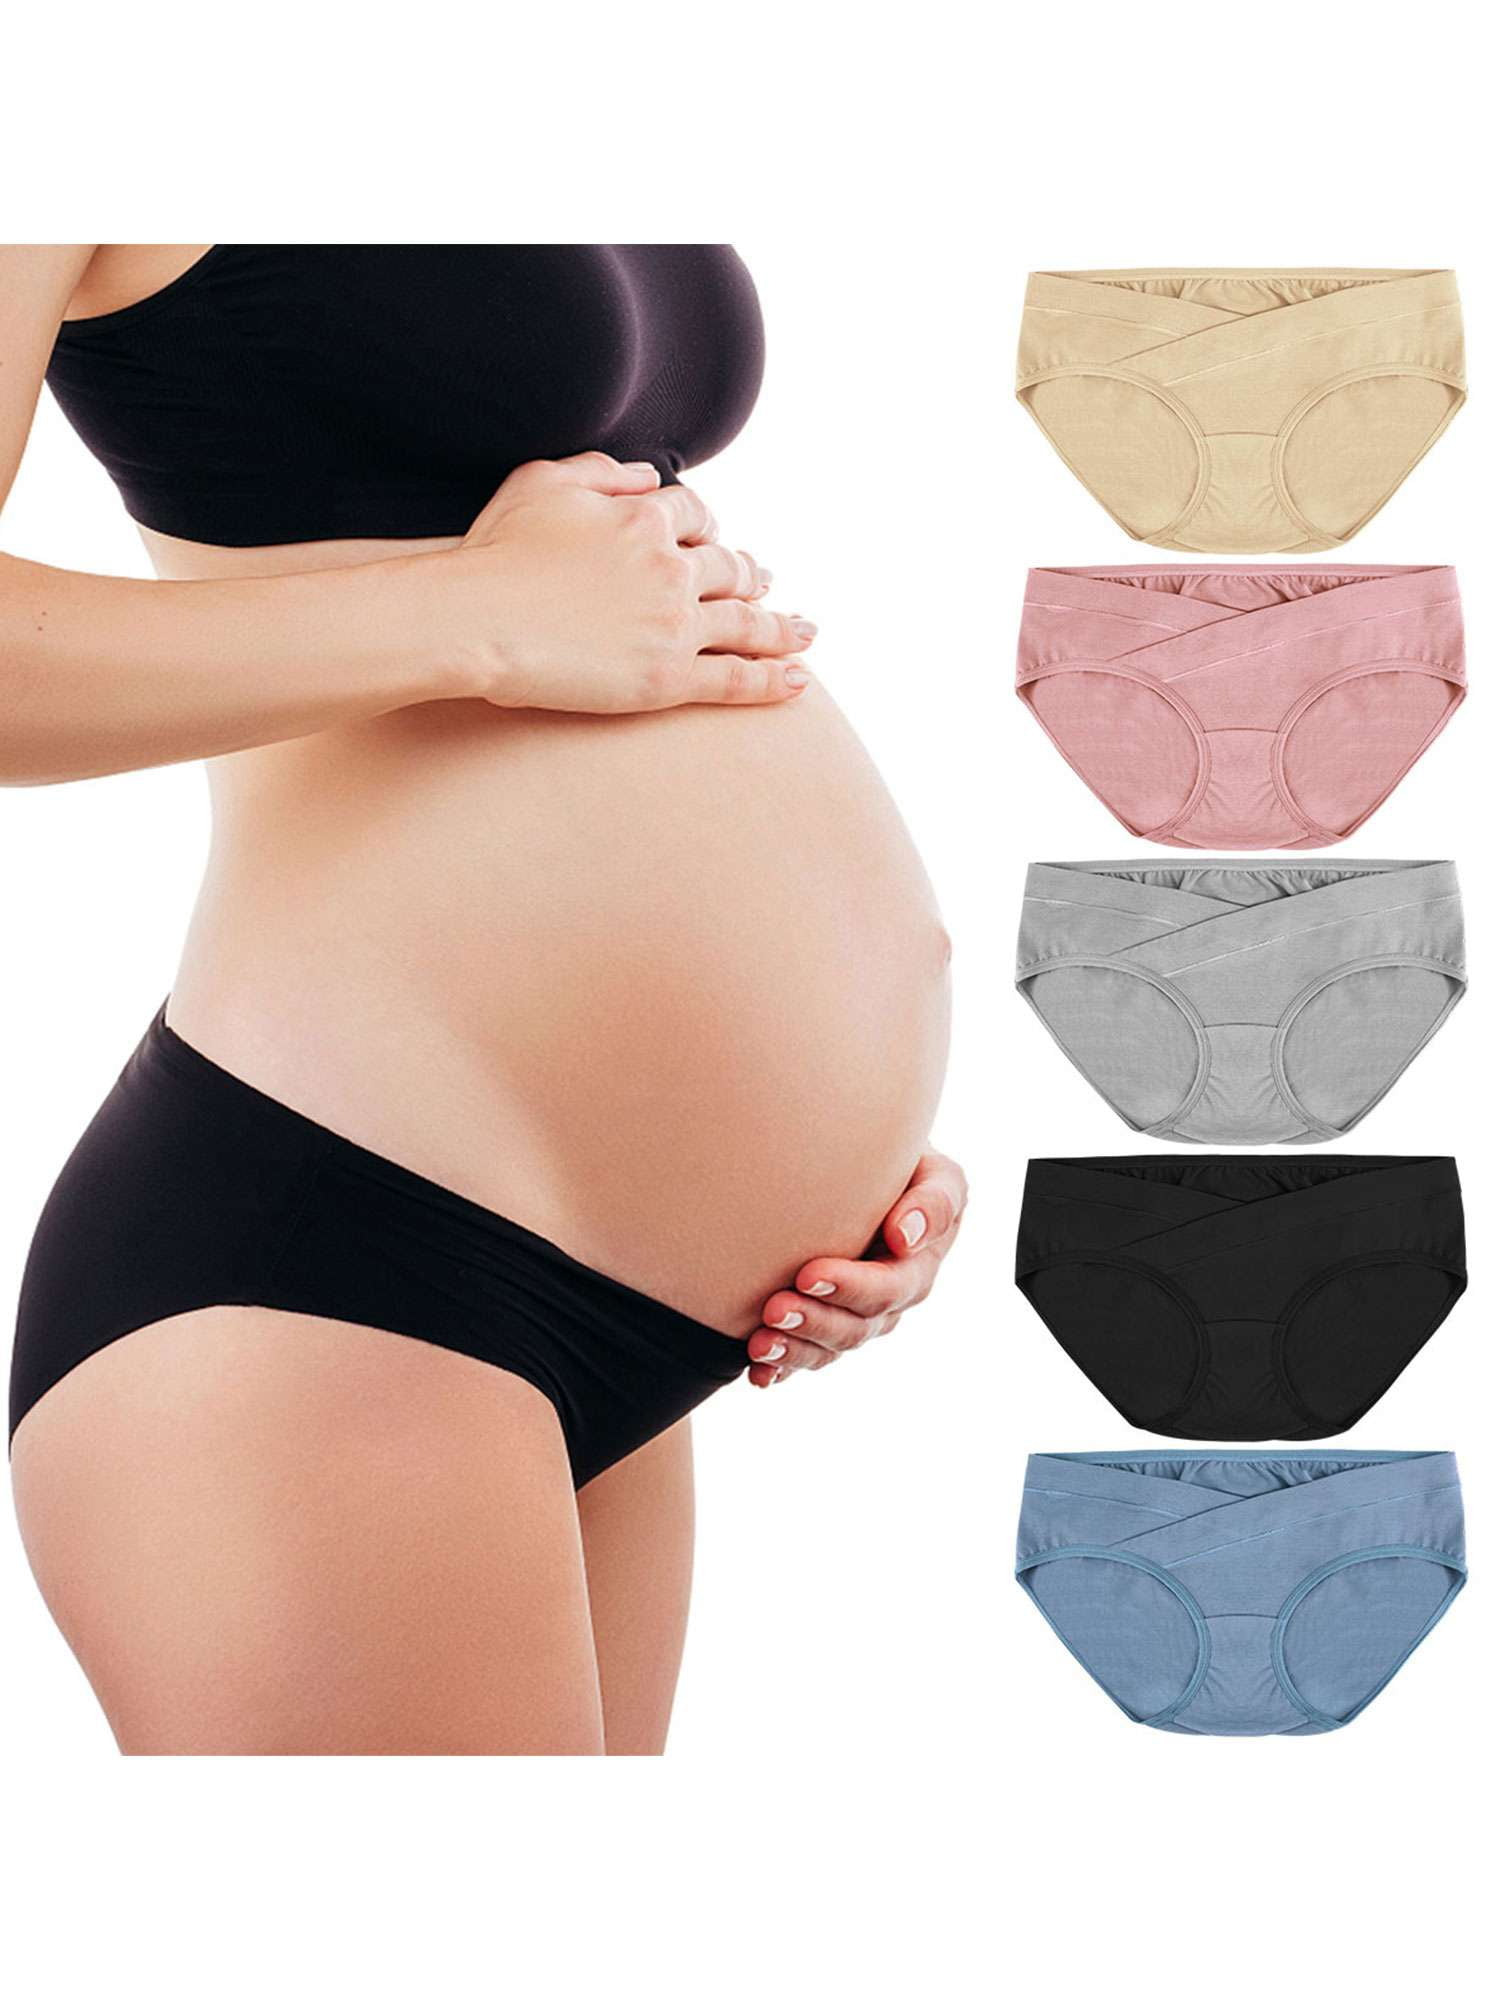 FAFWYP Women Ladies Plus Size Cotton High Waist Maternity